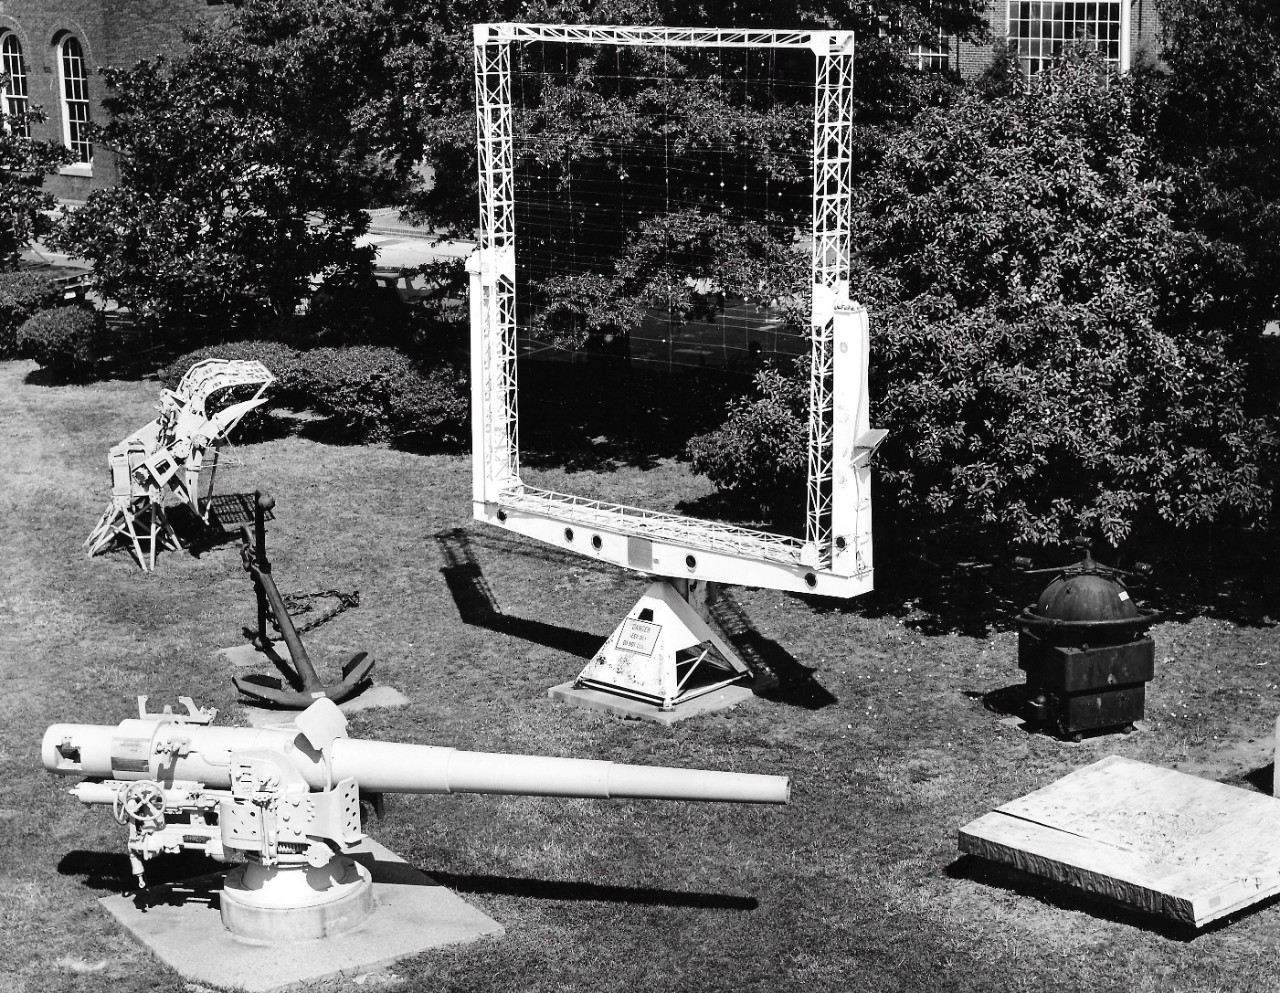 NMUSN-147:   Willard Park, Washington Navy Yard, Washington, D.C. 1970s.     XAF radar, with radars from USS South Dakota to the left.    Center German 5” inch Naval Gun from World War I.   View faces north.    National Museum of the U.S. Navy Photograph Collection.  